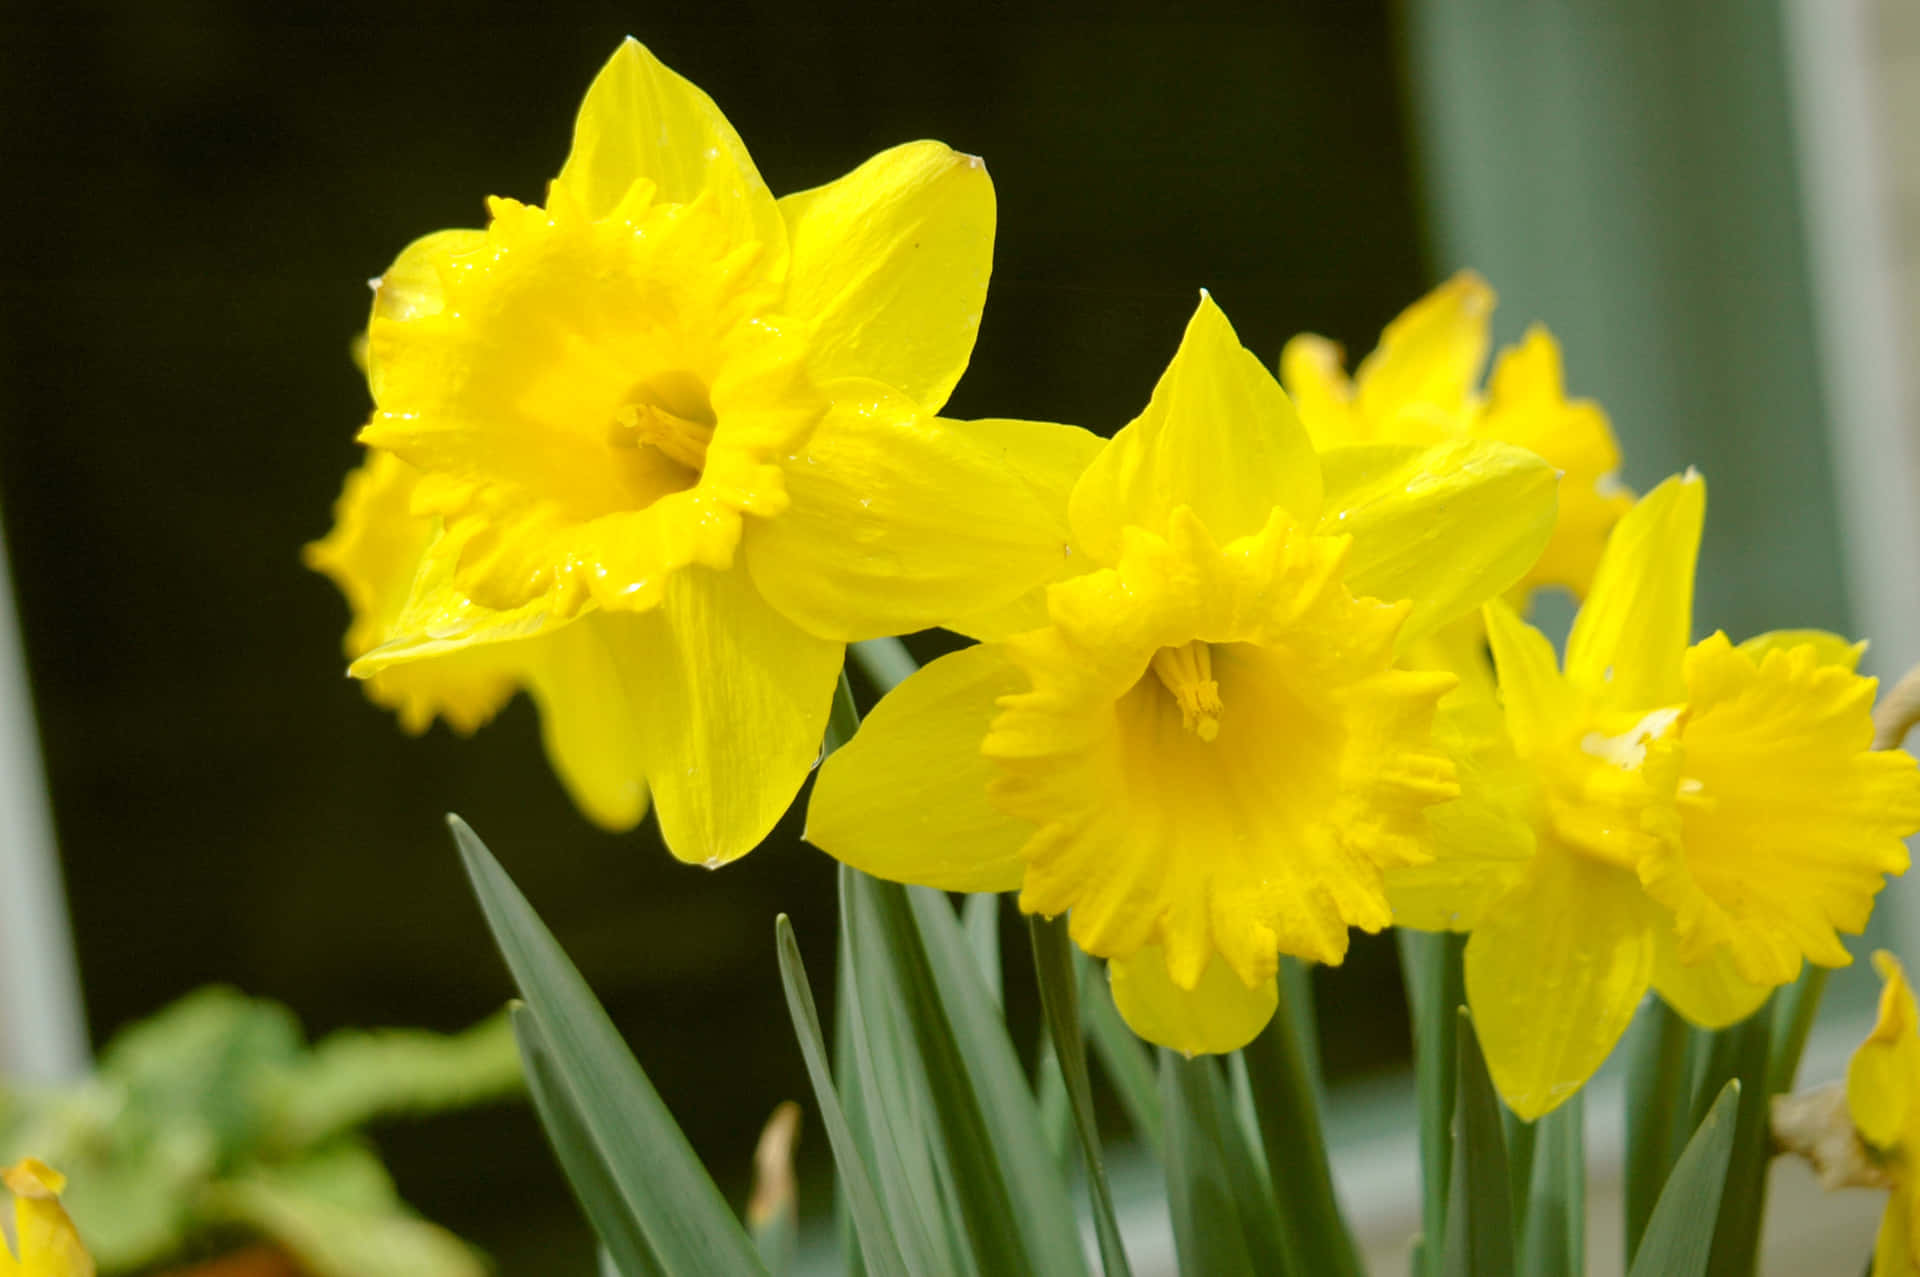 A beautiful daffodil in full bloom